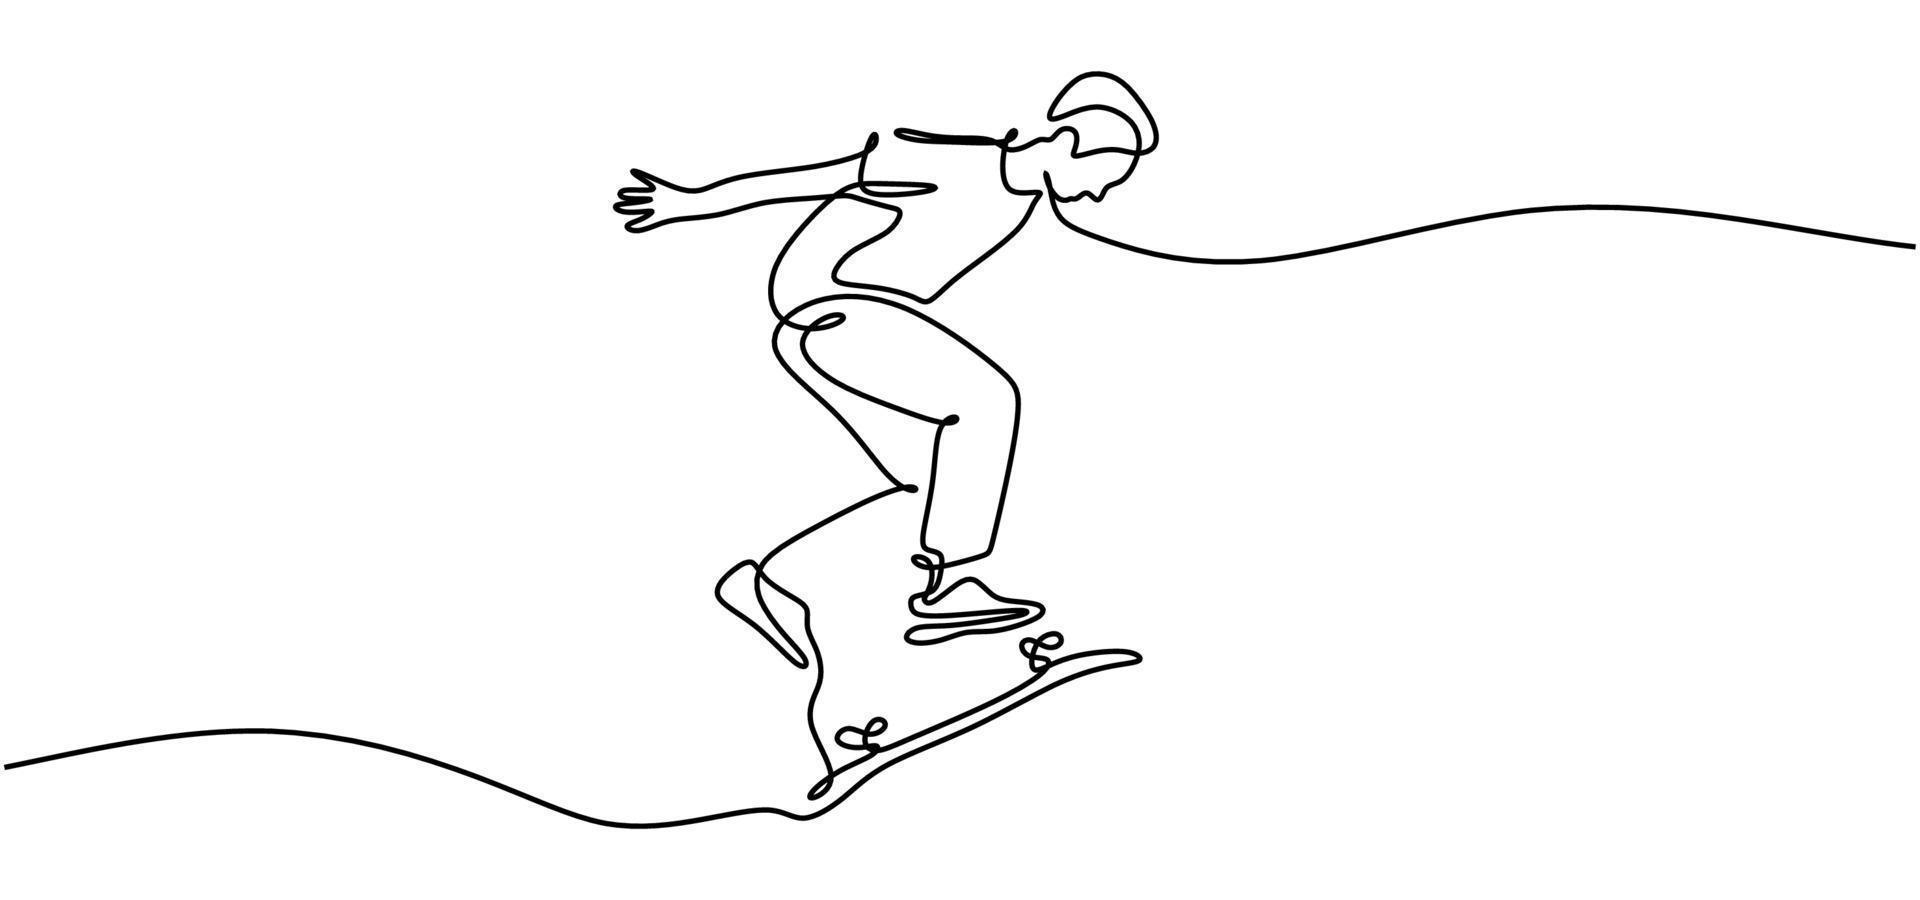 Skateboard one line drawing minimalism single line art vector